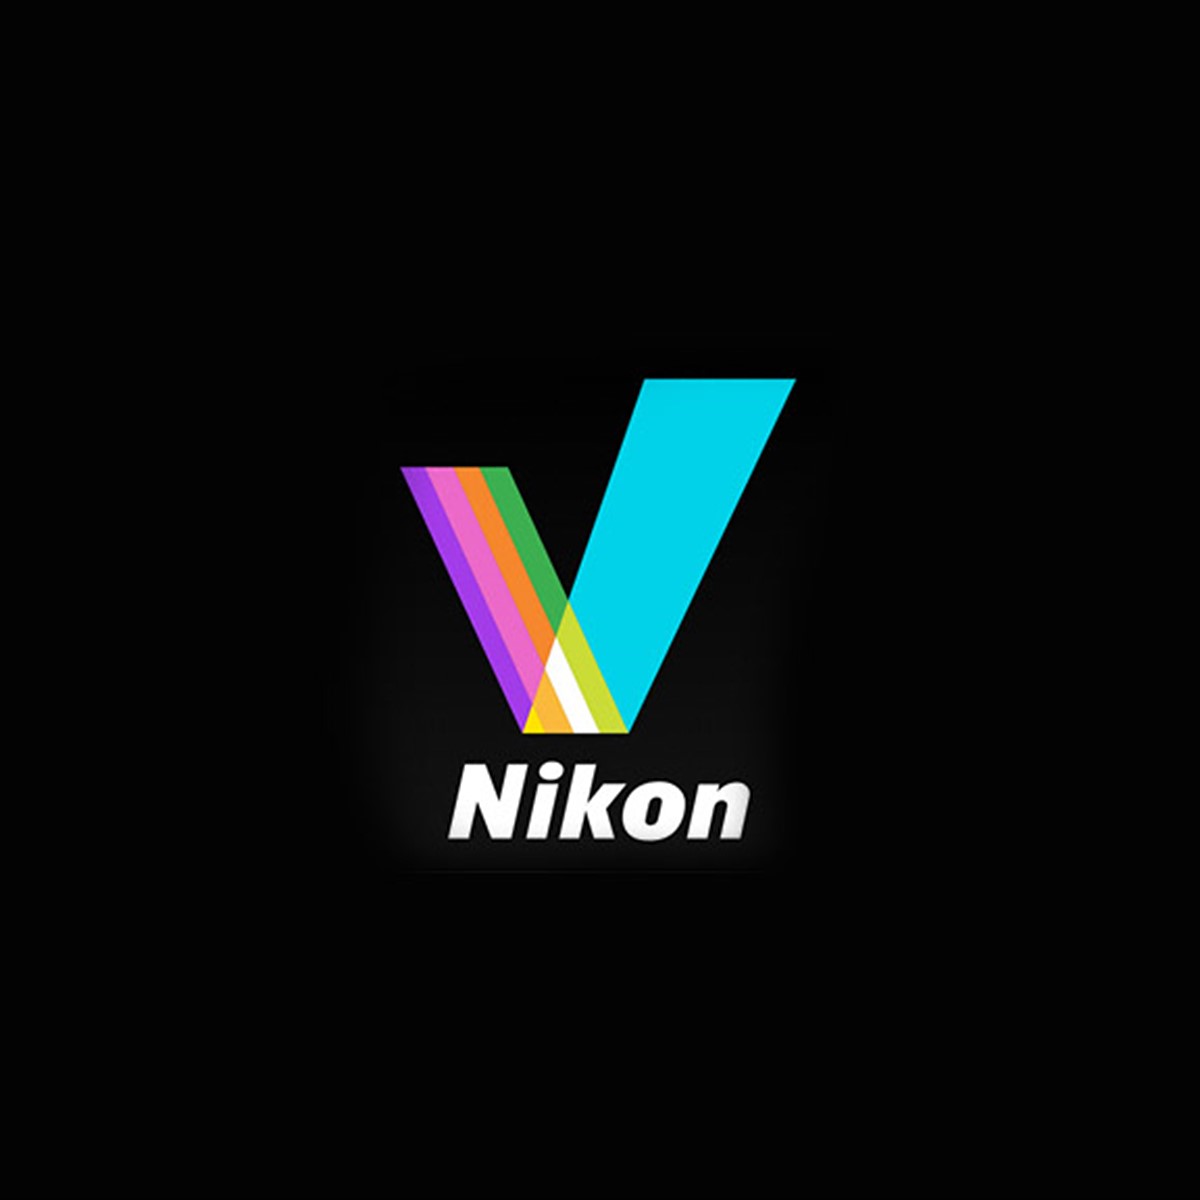 Nikon picture download